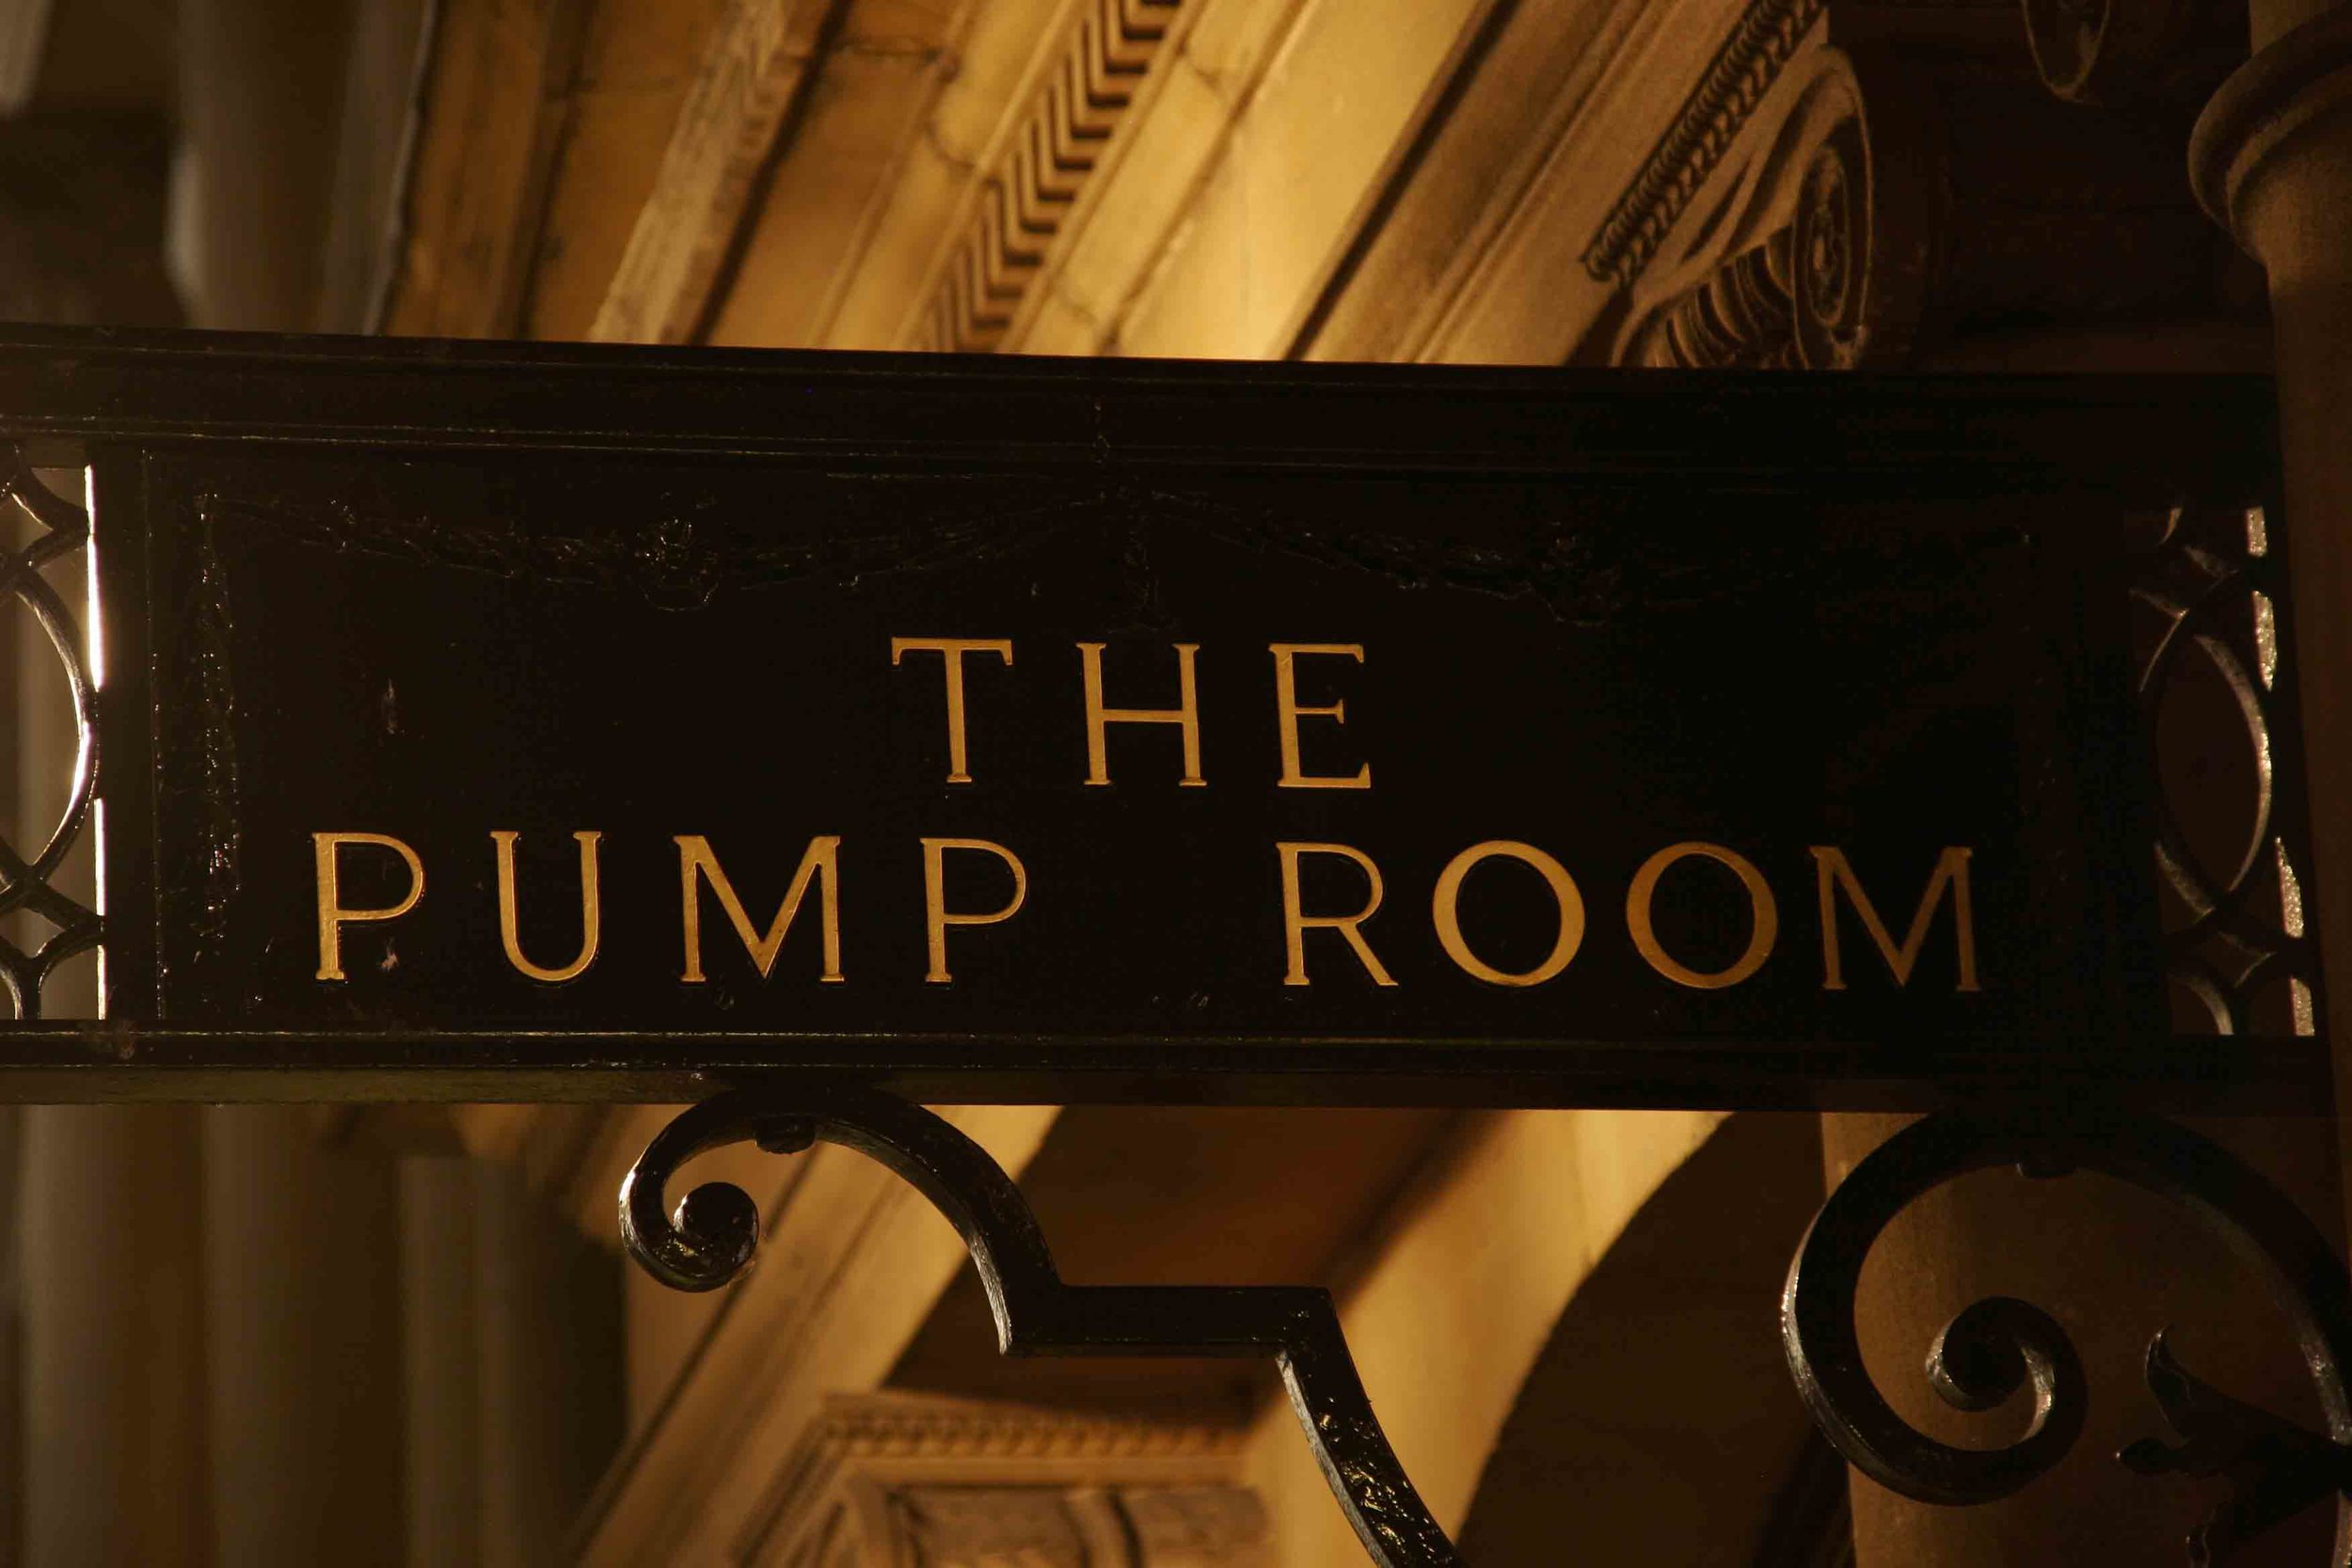 A-Pump Room Sign 1A.jpg